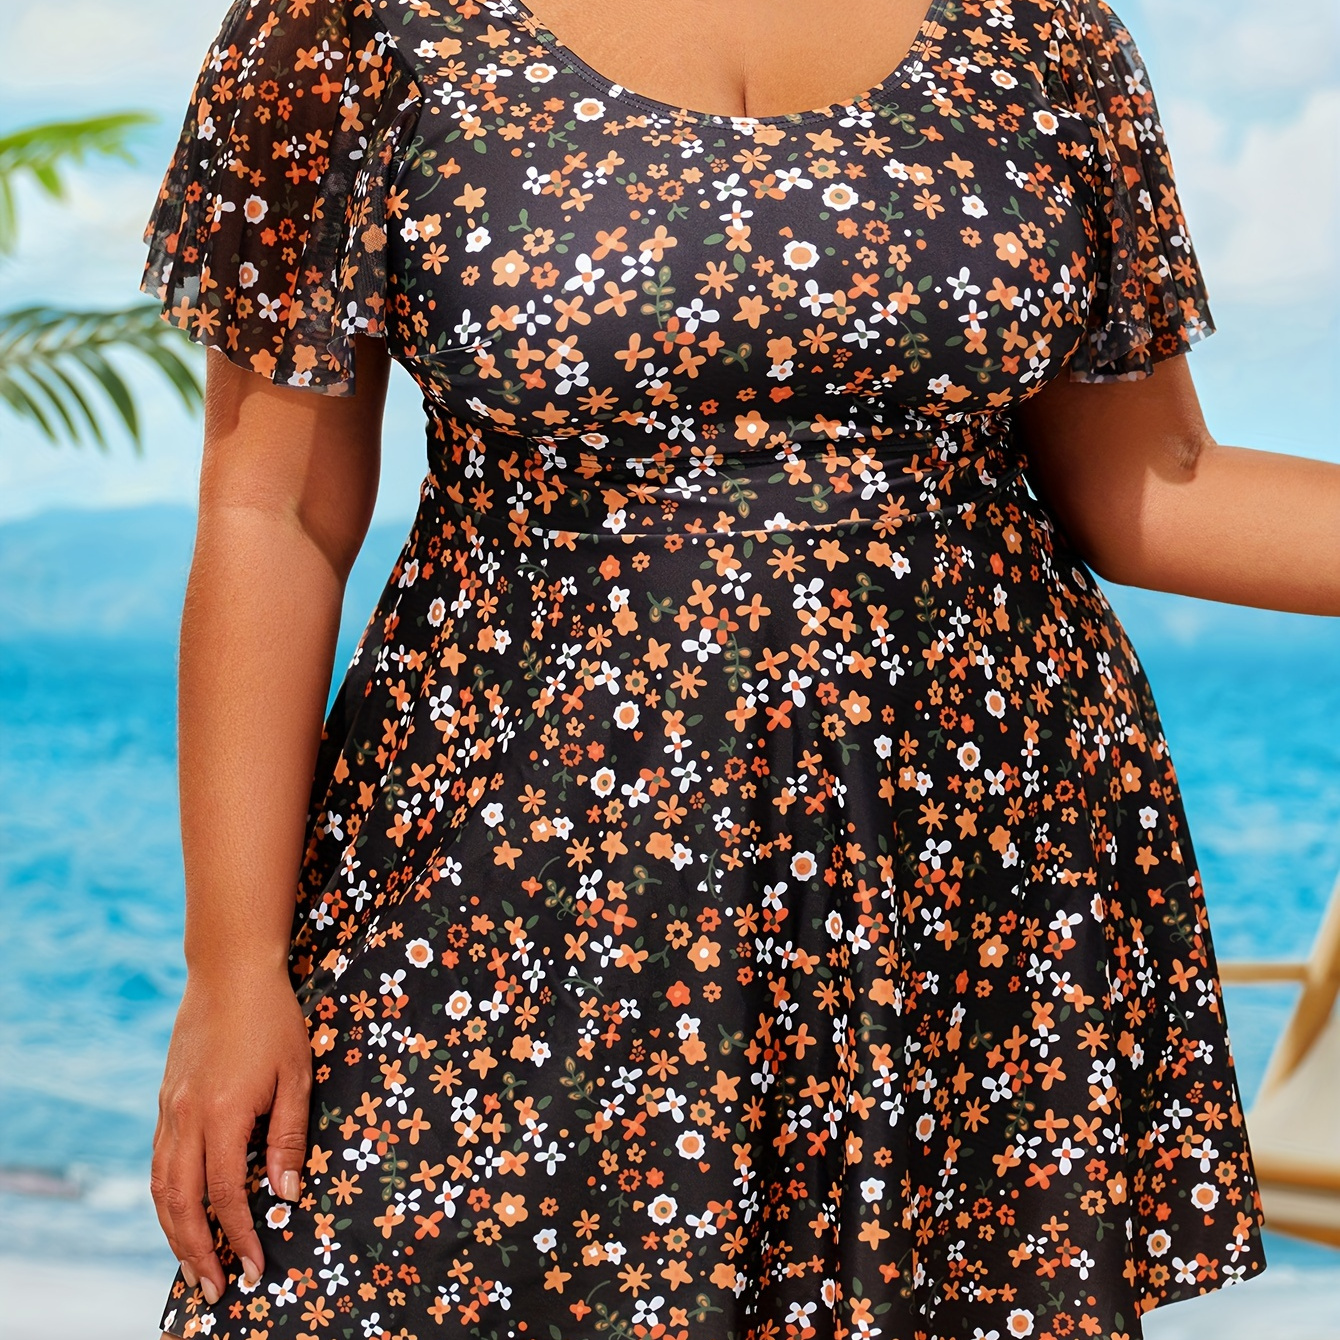 

Women's Plus Size Tankini Swim Dress, Conservative Style, Floral Print, With High Cut Panty, Summer Beachwear